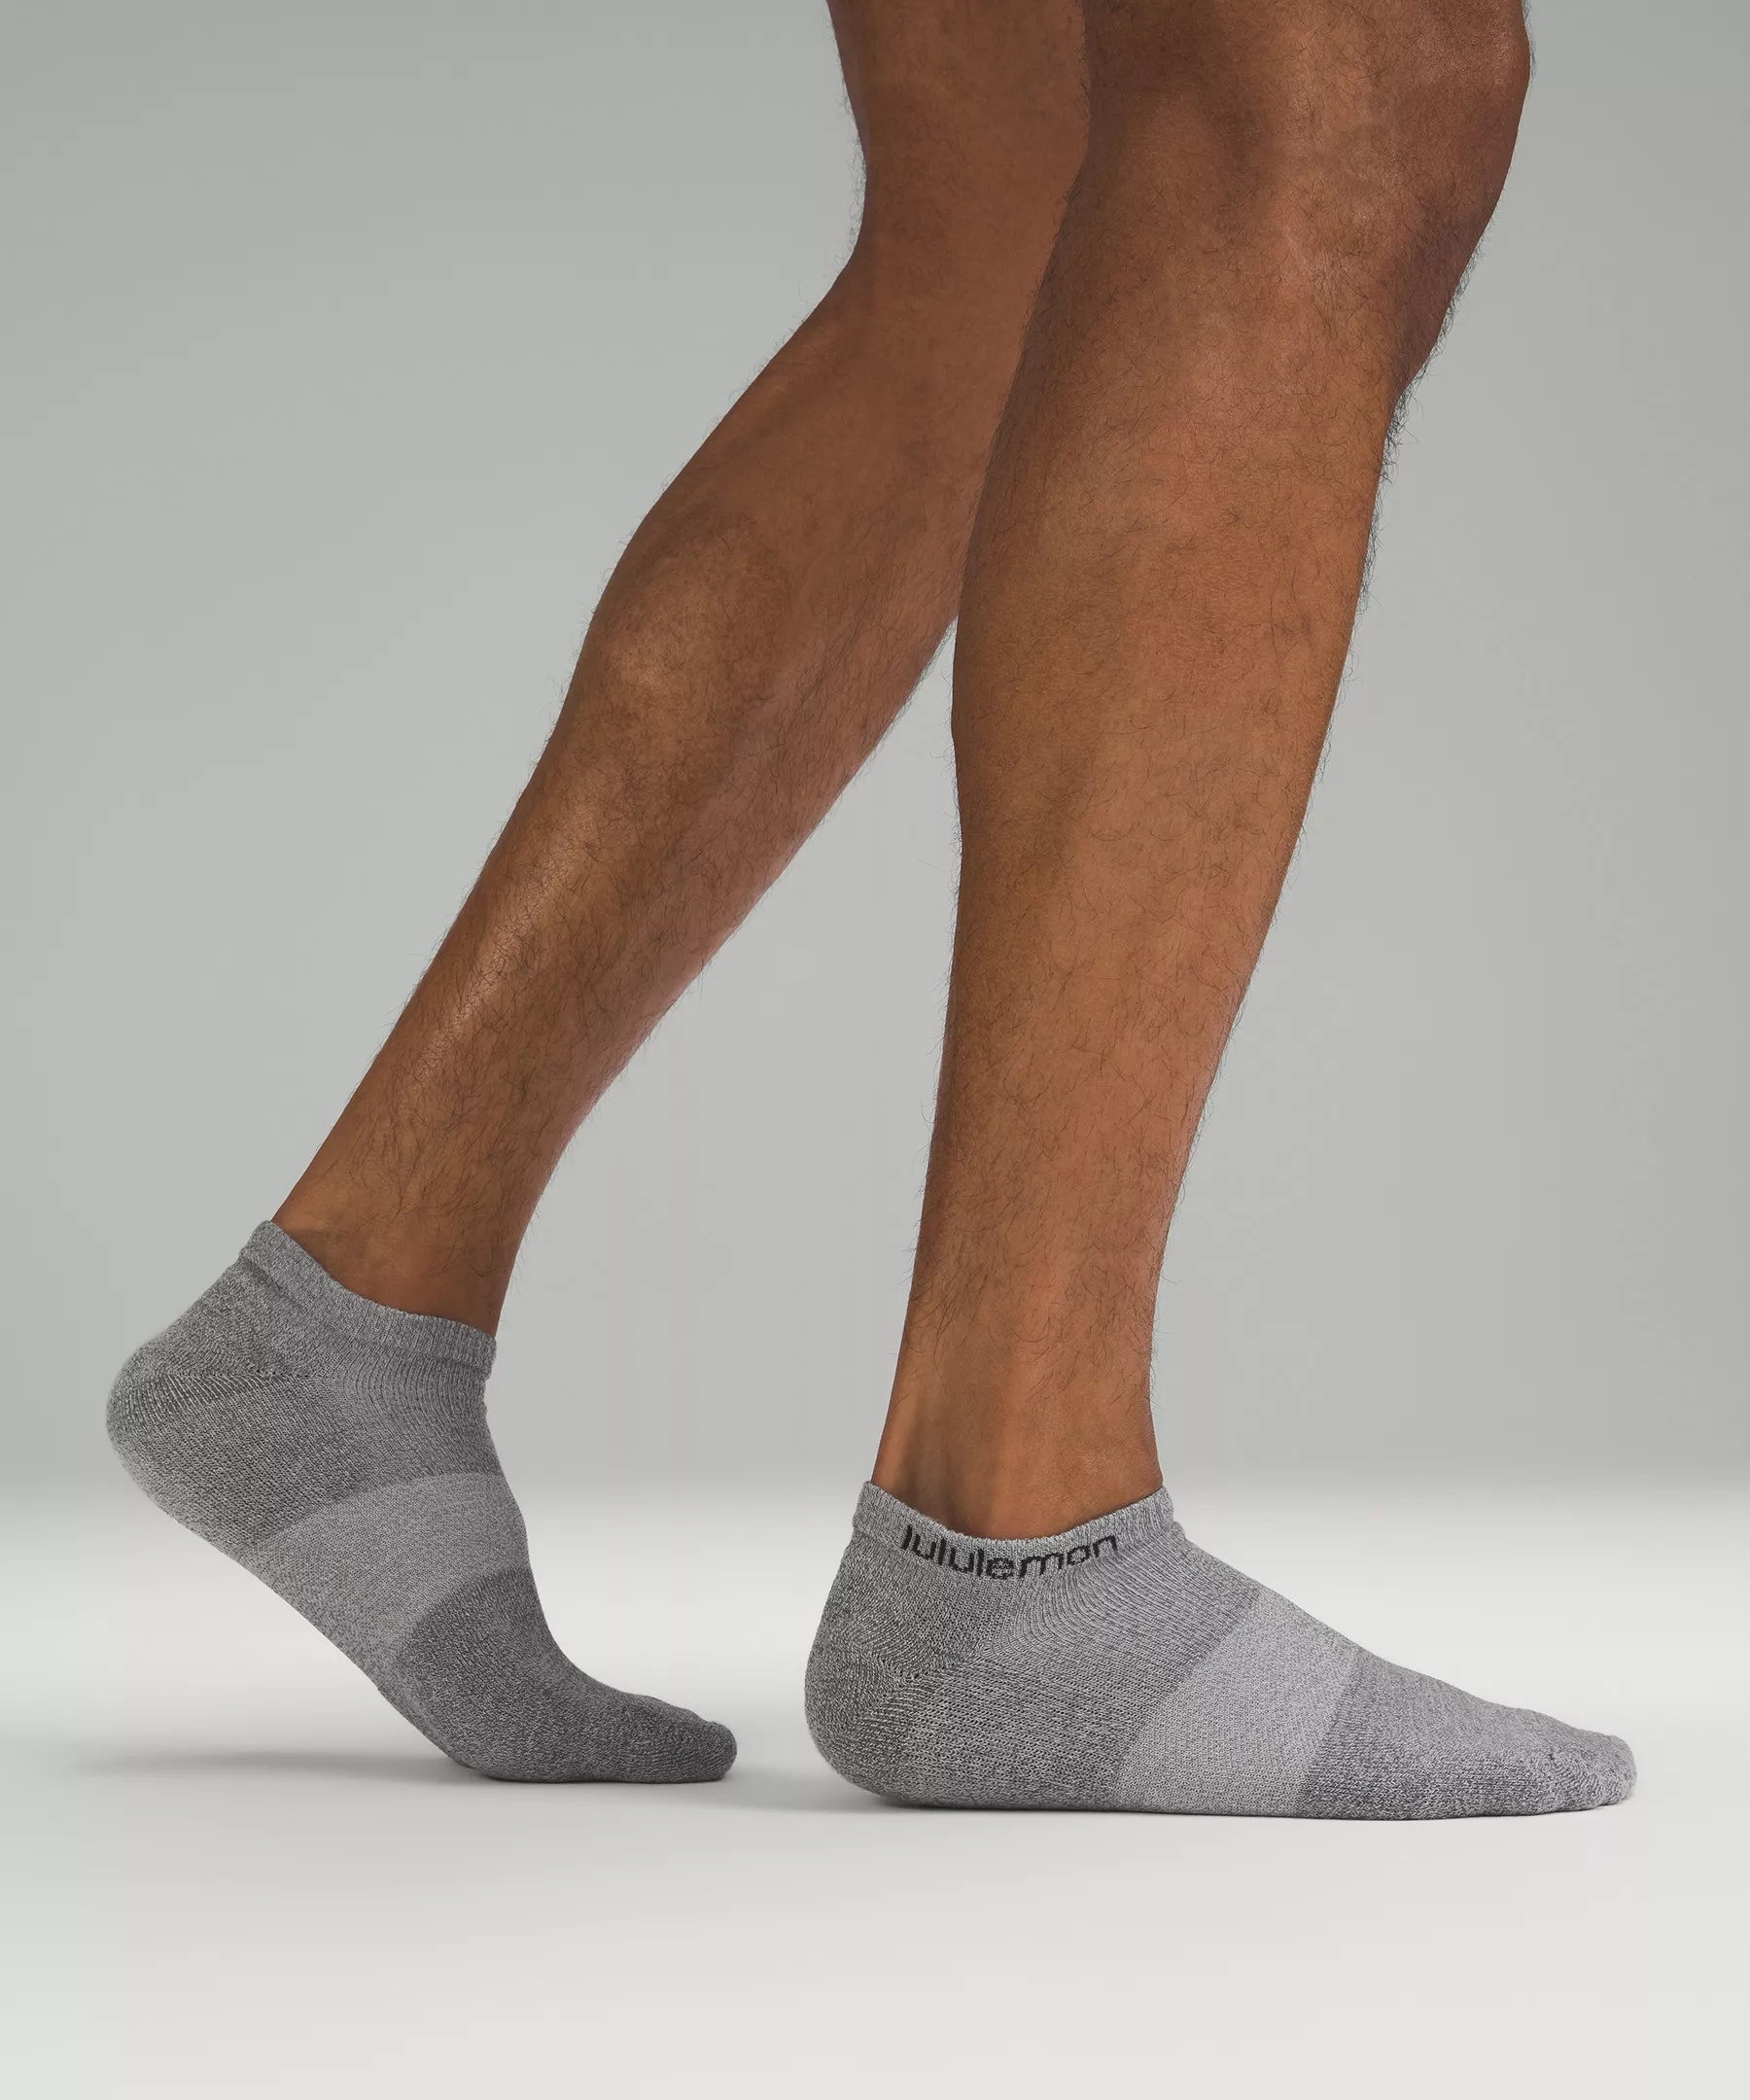 Men's Daily Stride Comfort Low-Ankle Socks *3 Pack - 2